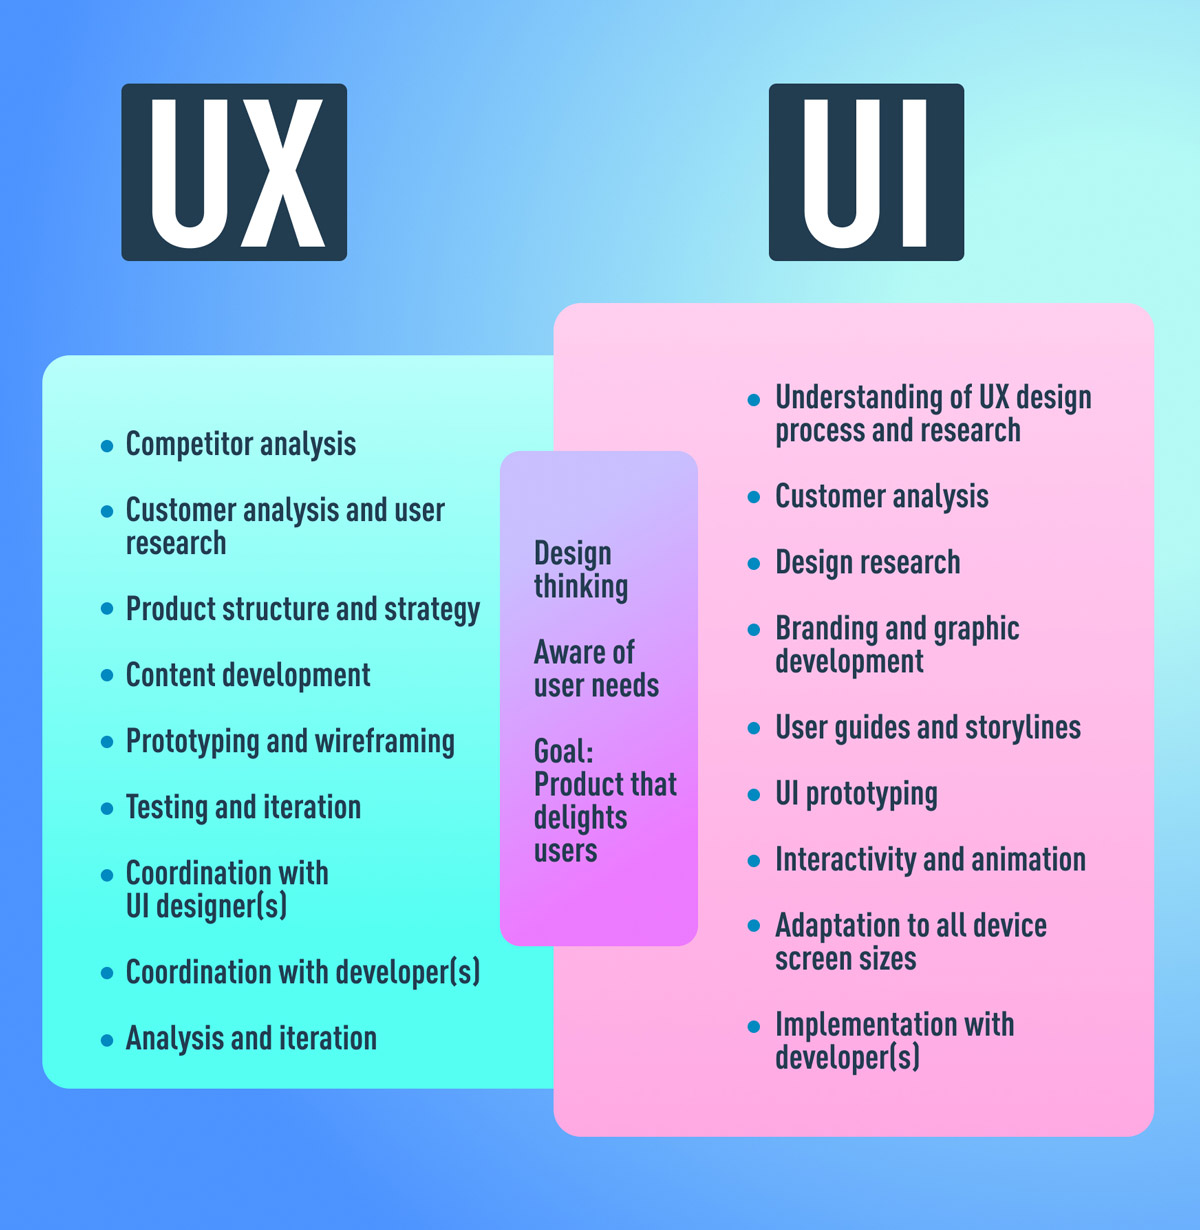 A list of the day-to-day tasks of a UX designer vs. a UI designer